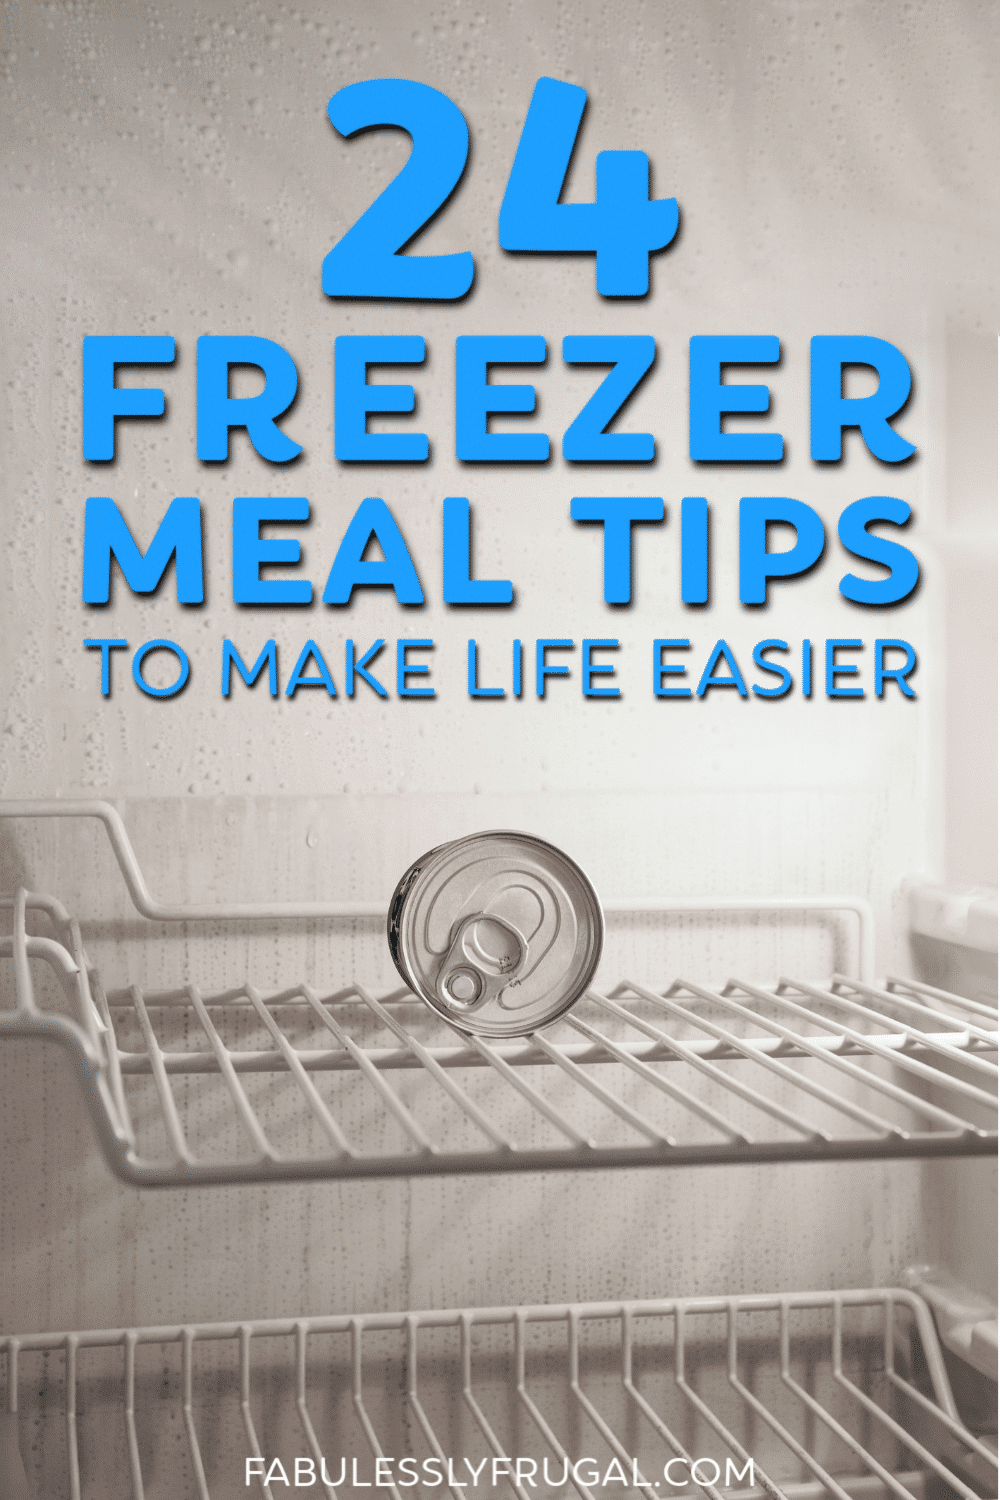 Freezer meal tips